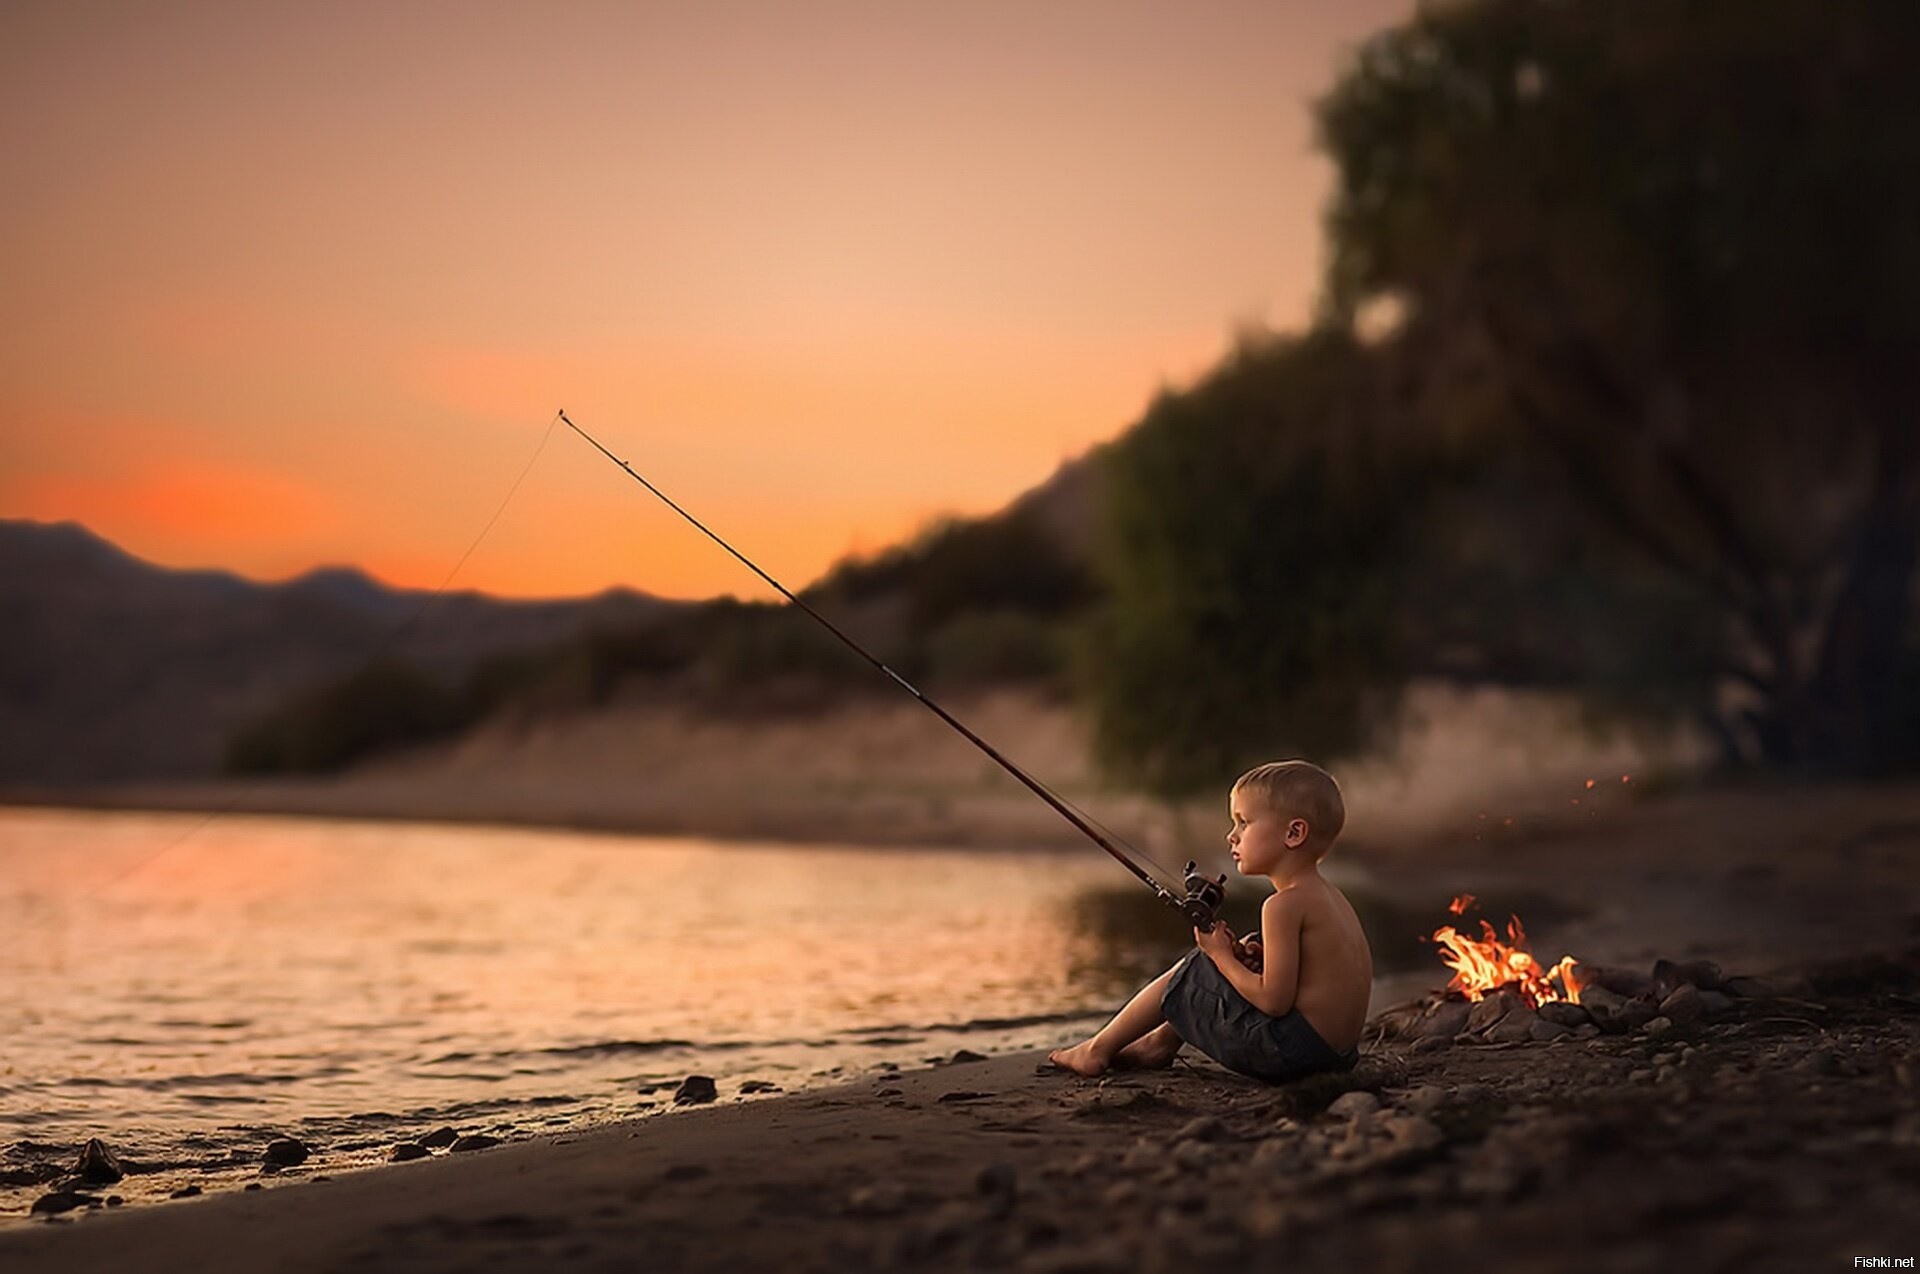 Мальчик ловил рыбу на реке. Мальчик Рыбак. Мальчик с удочкой. Озеро с удочкой. Рыбак на берегу.